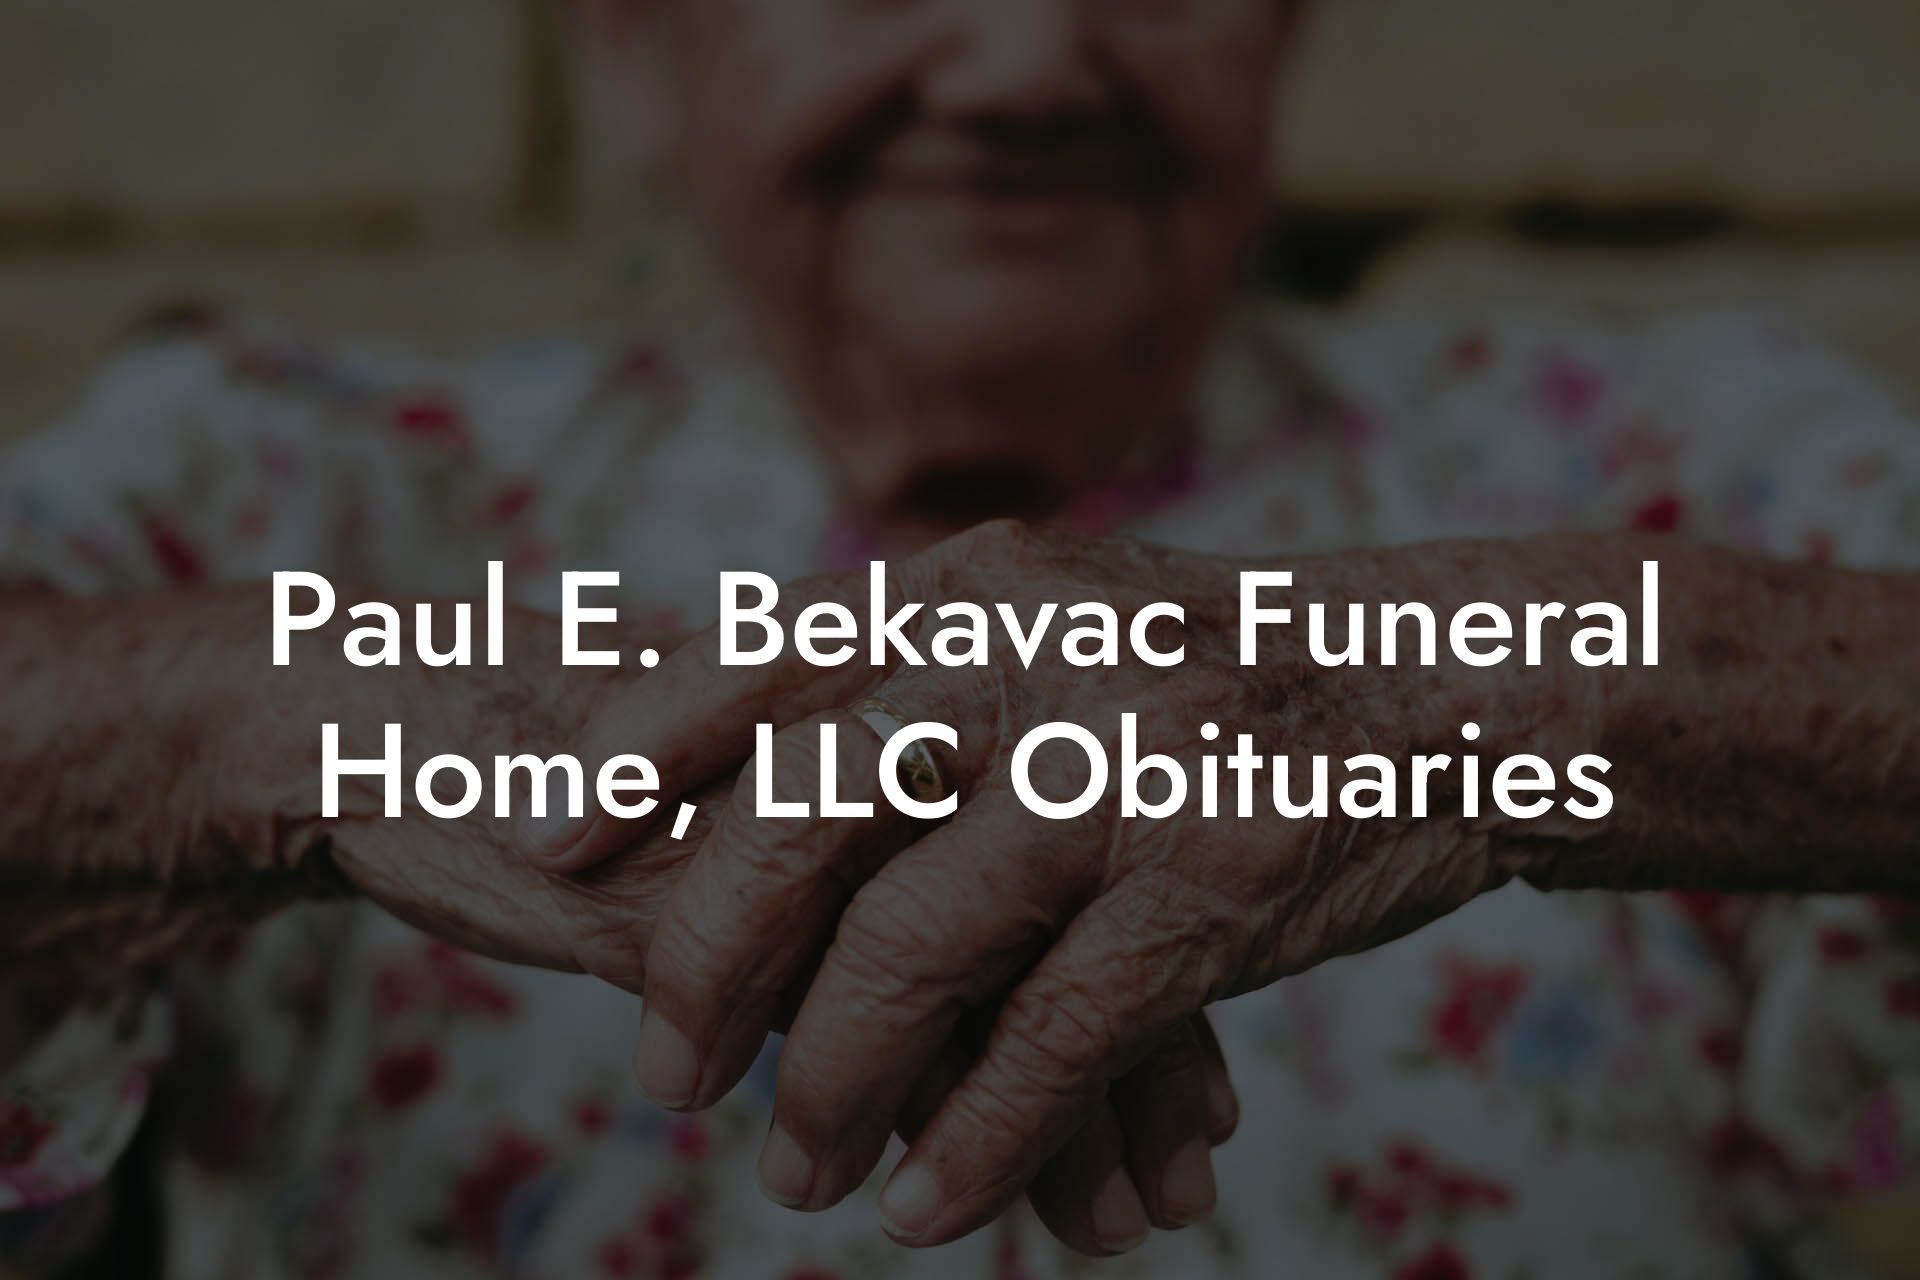 Paul E. Bekavac Funeral Home, LLC Obituaries